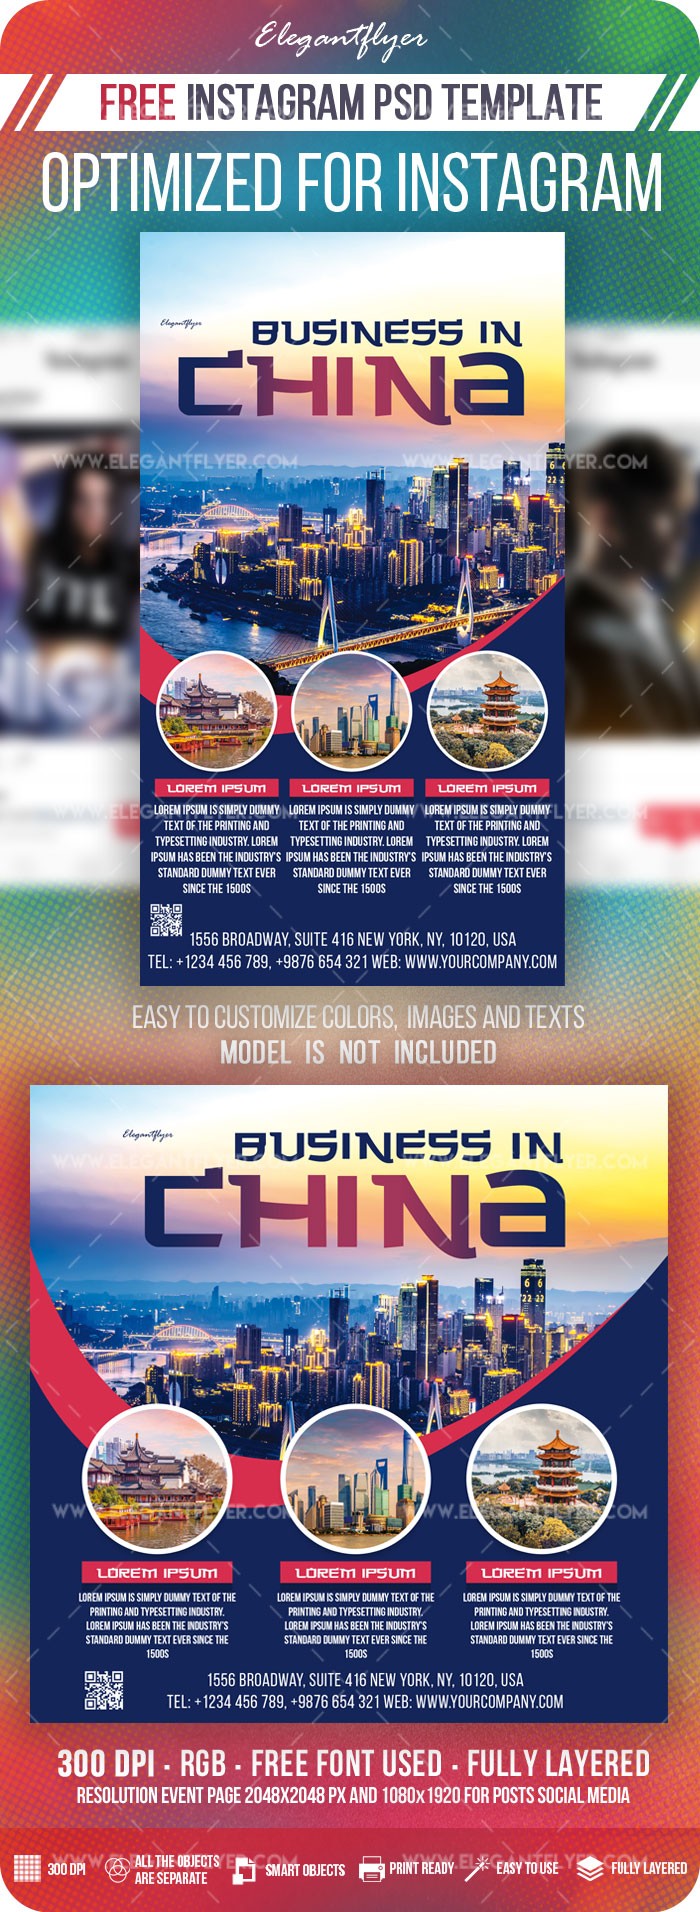 Business in China Instagram by ElegantFlyer